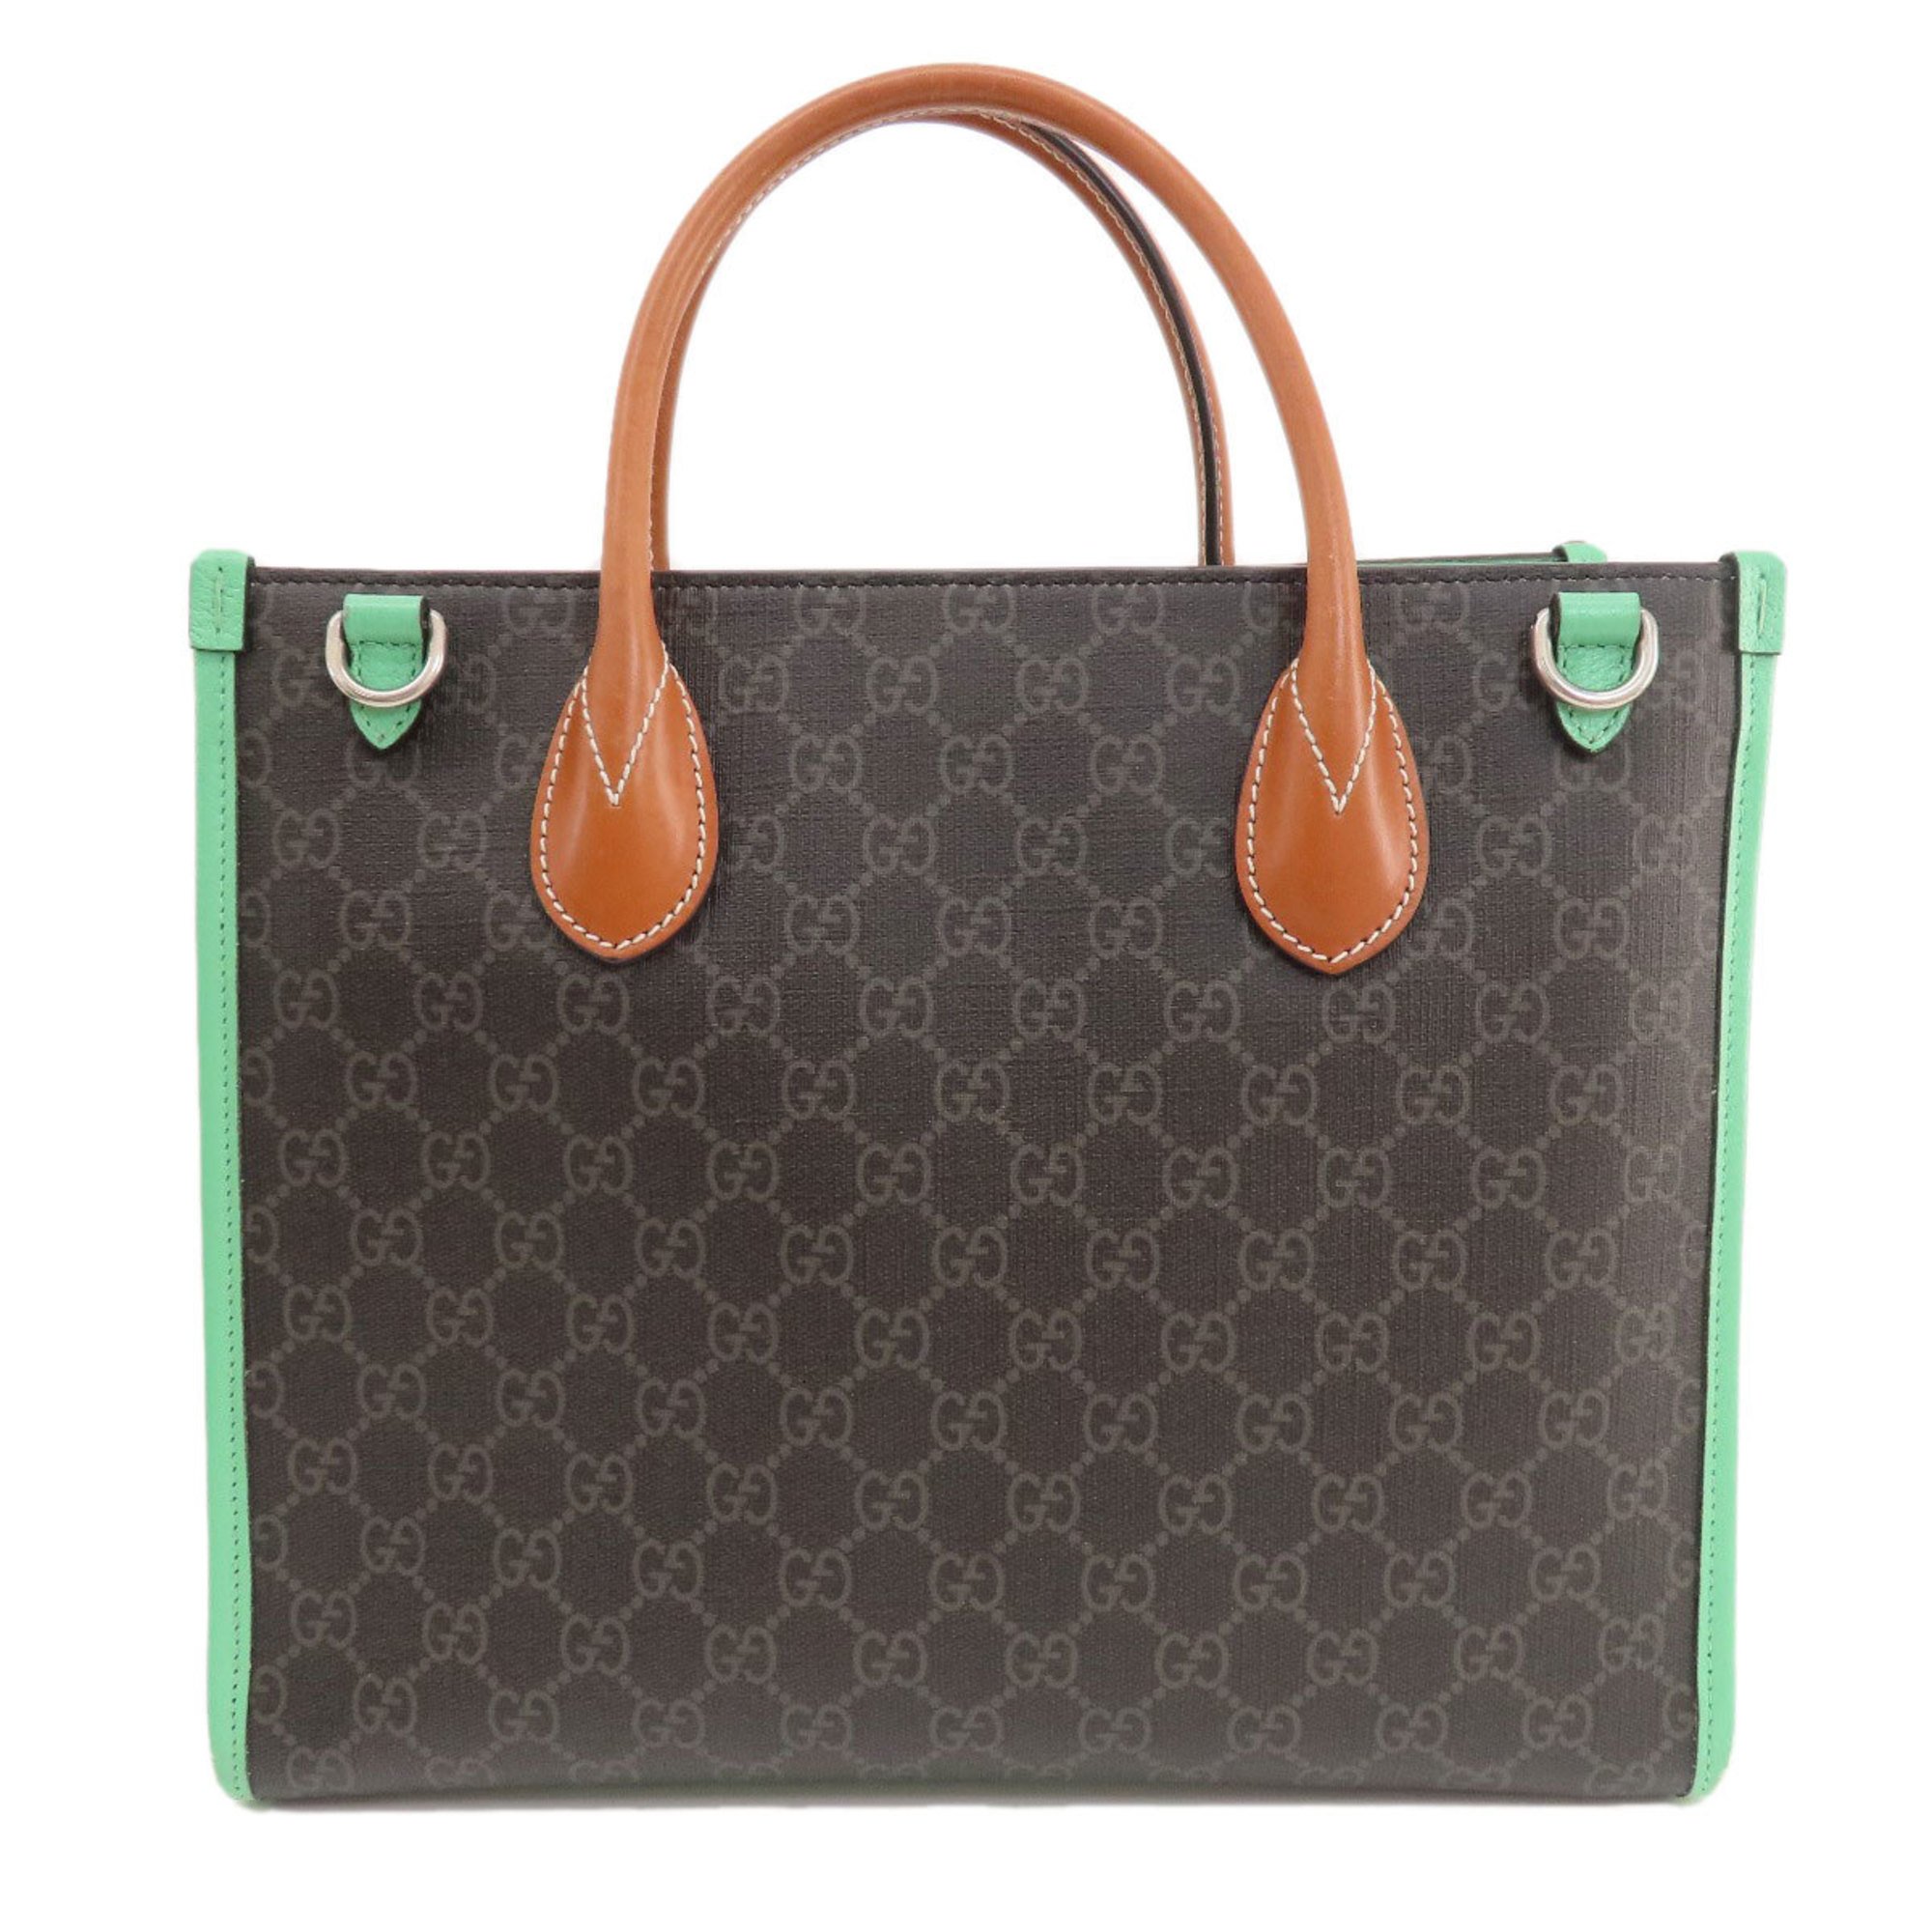 Gucci 680956 LOVE PARADE GUCCI GG Handbag Coated Canvas Women's